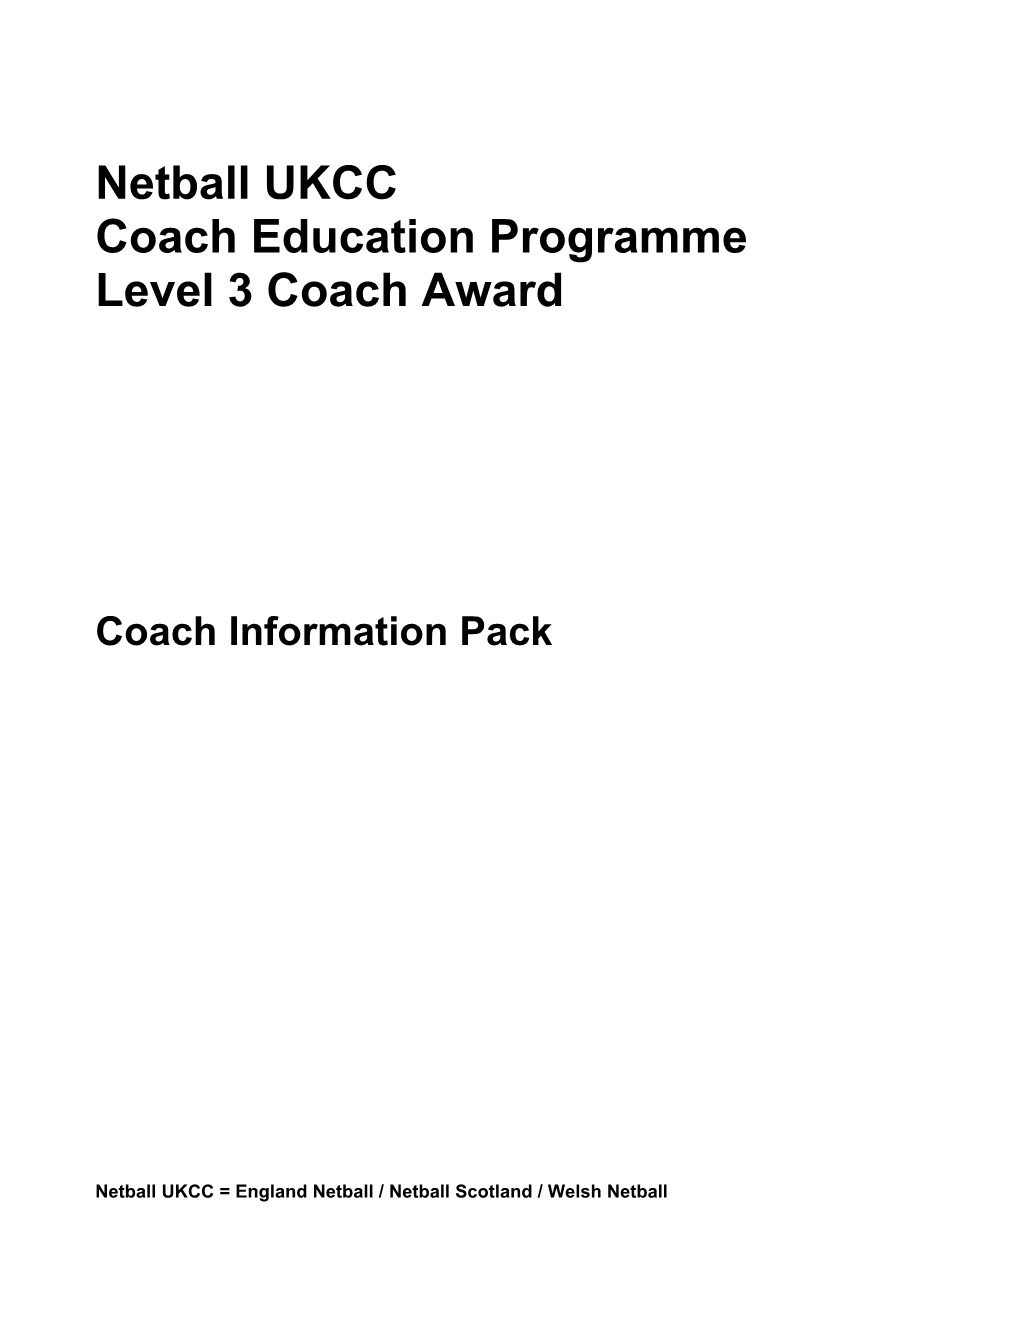 Coach Education Programme